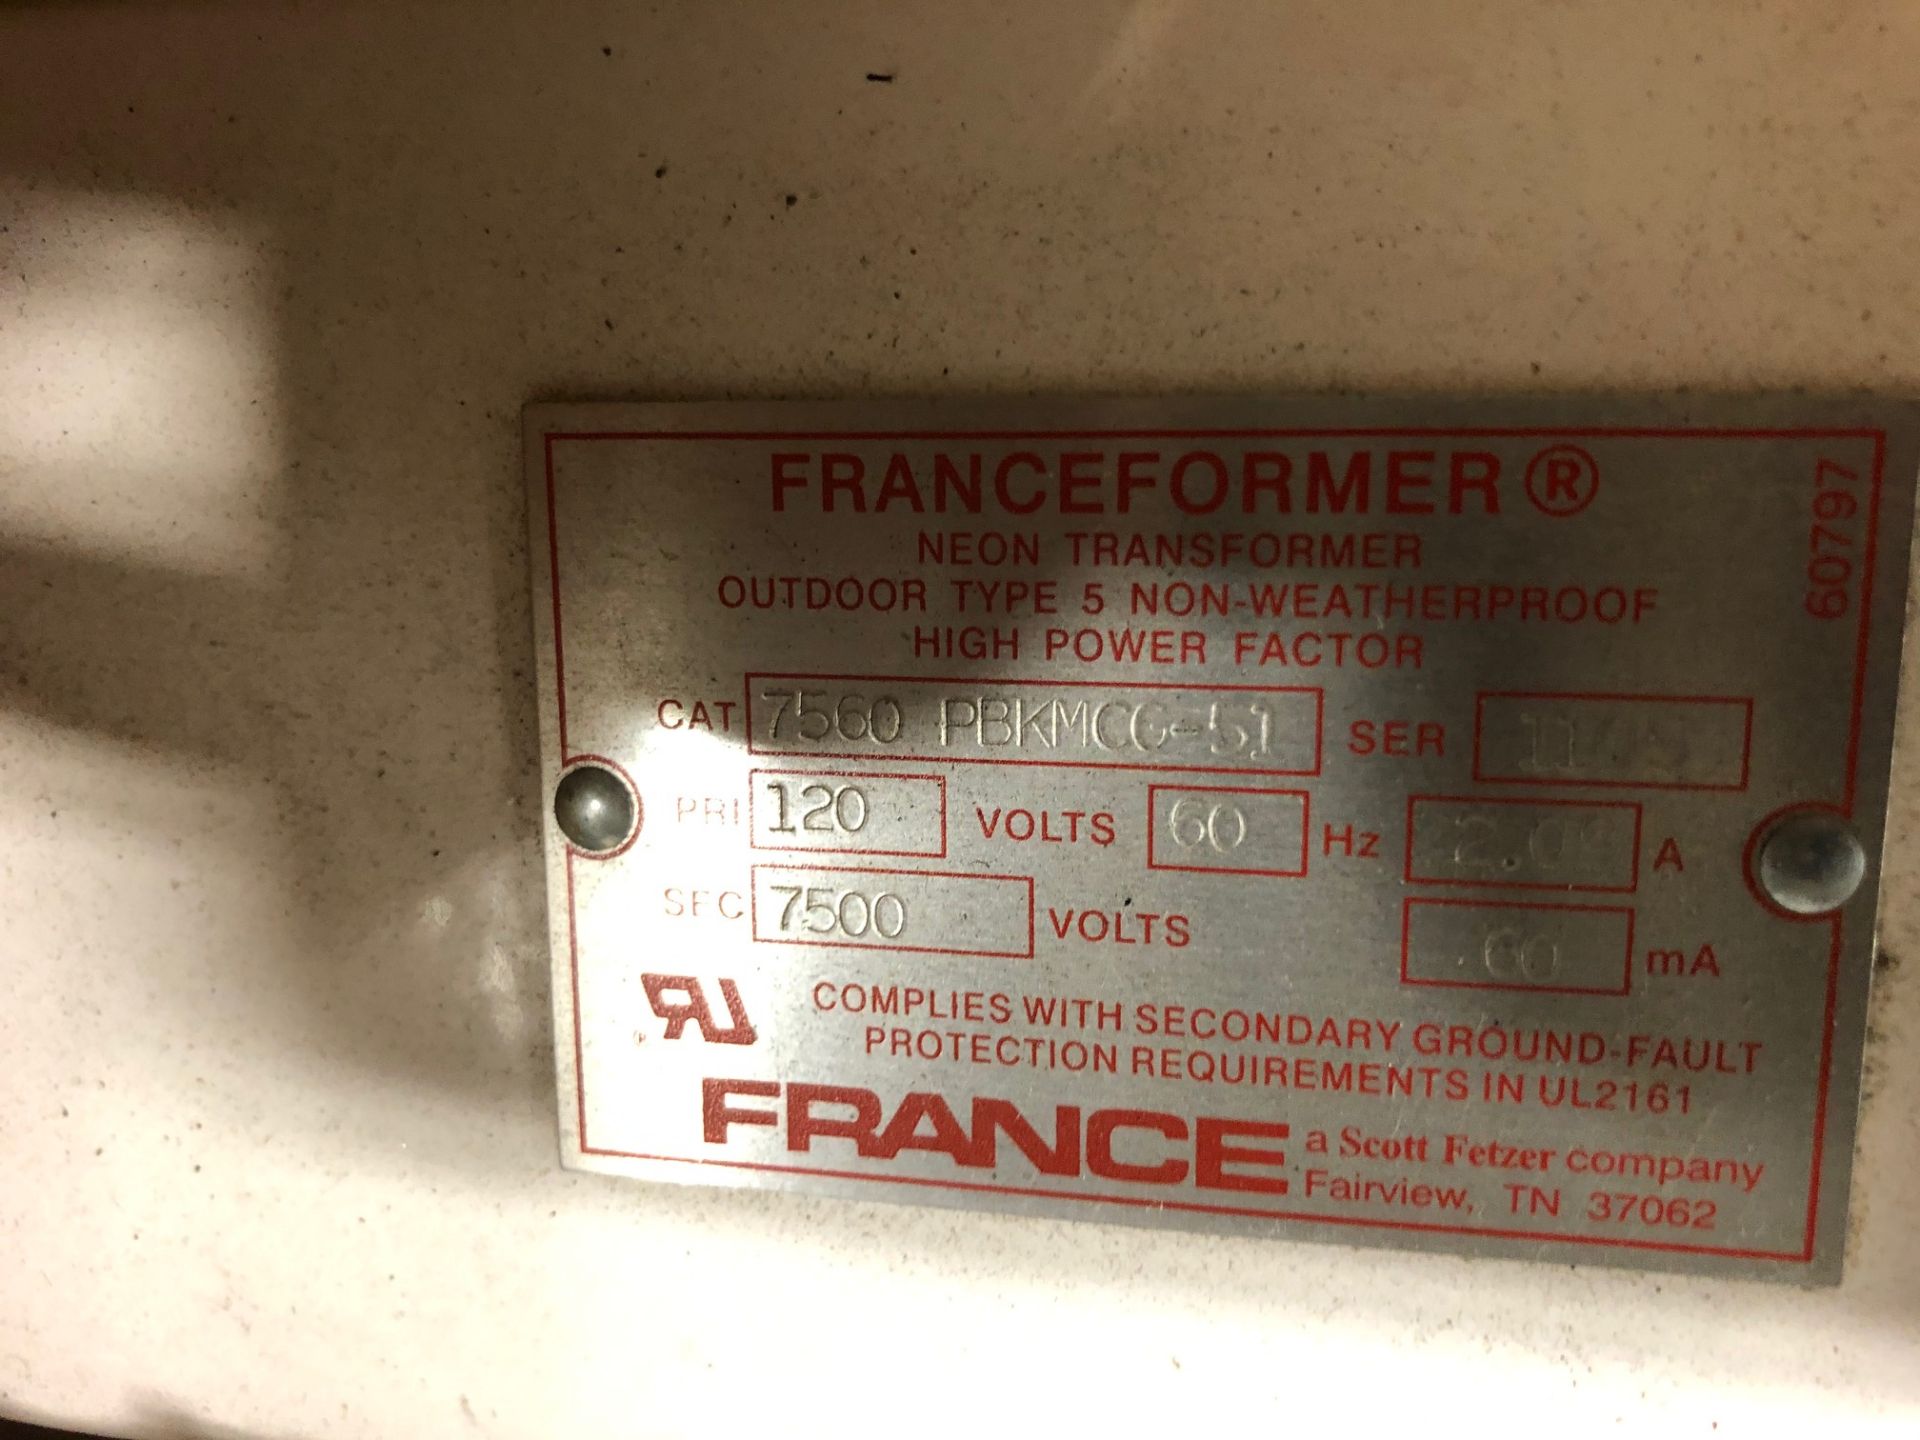 Pallet lot of Franceformers Neon transformers for sign lighting - Image 3 of 3